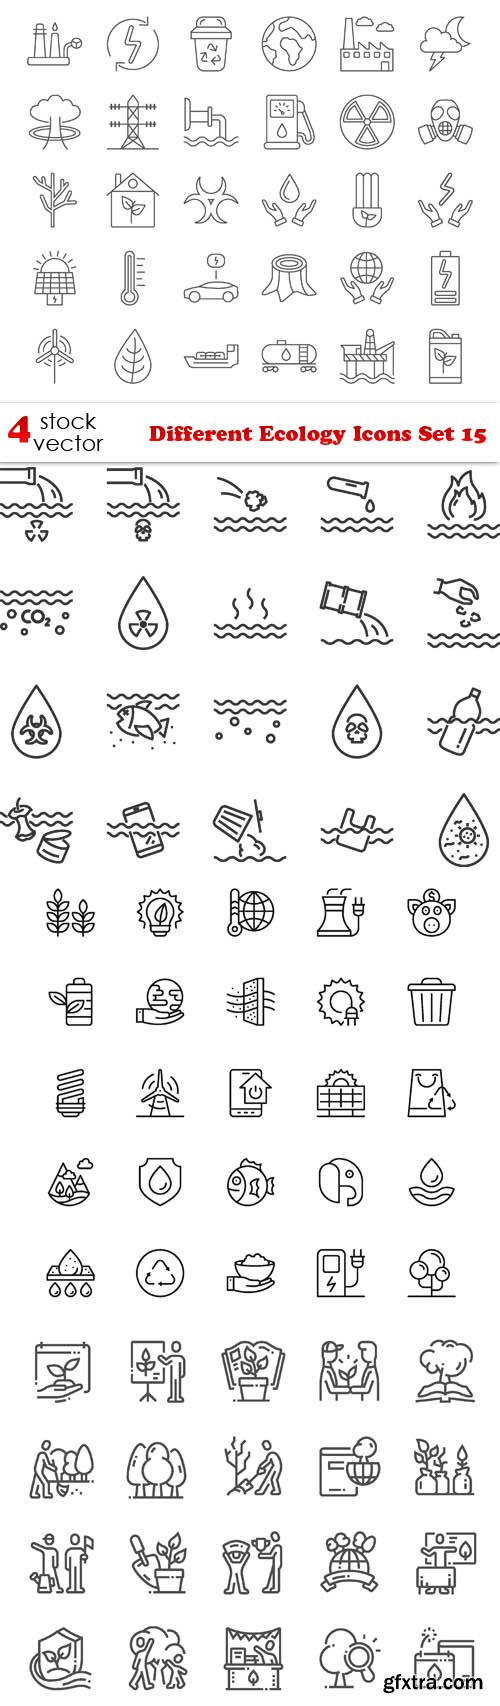 Vectors - Different Ecology Icons Set 15